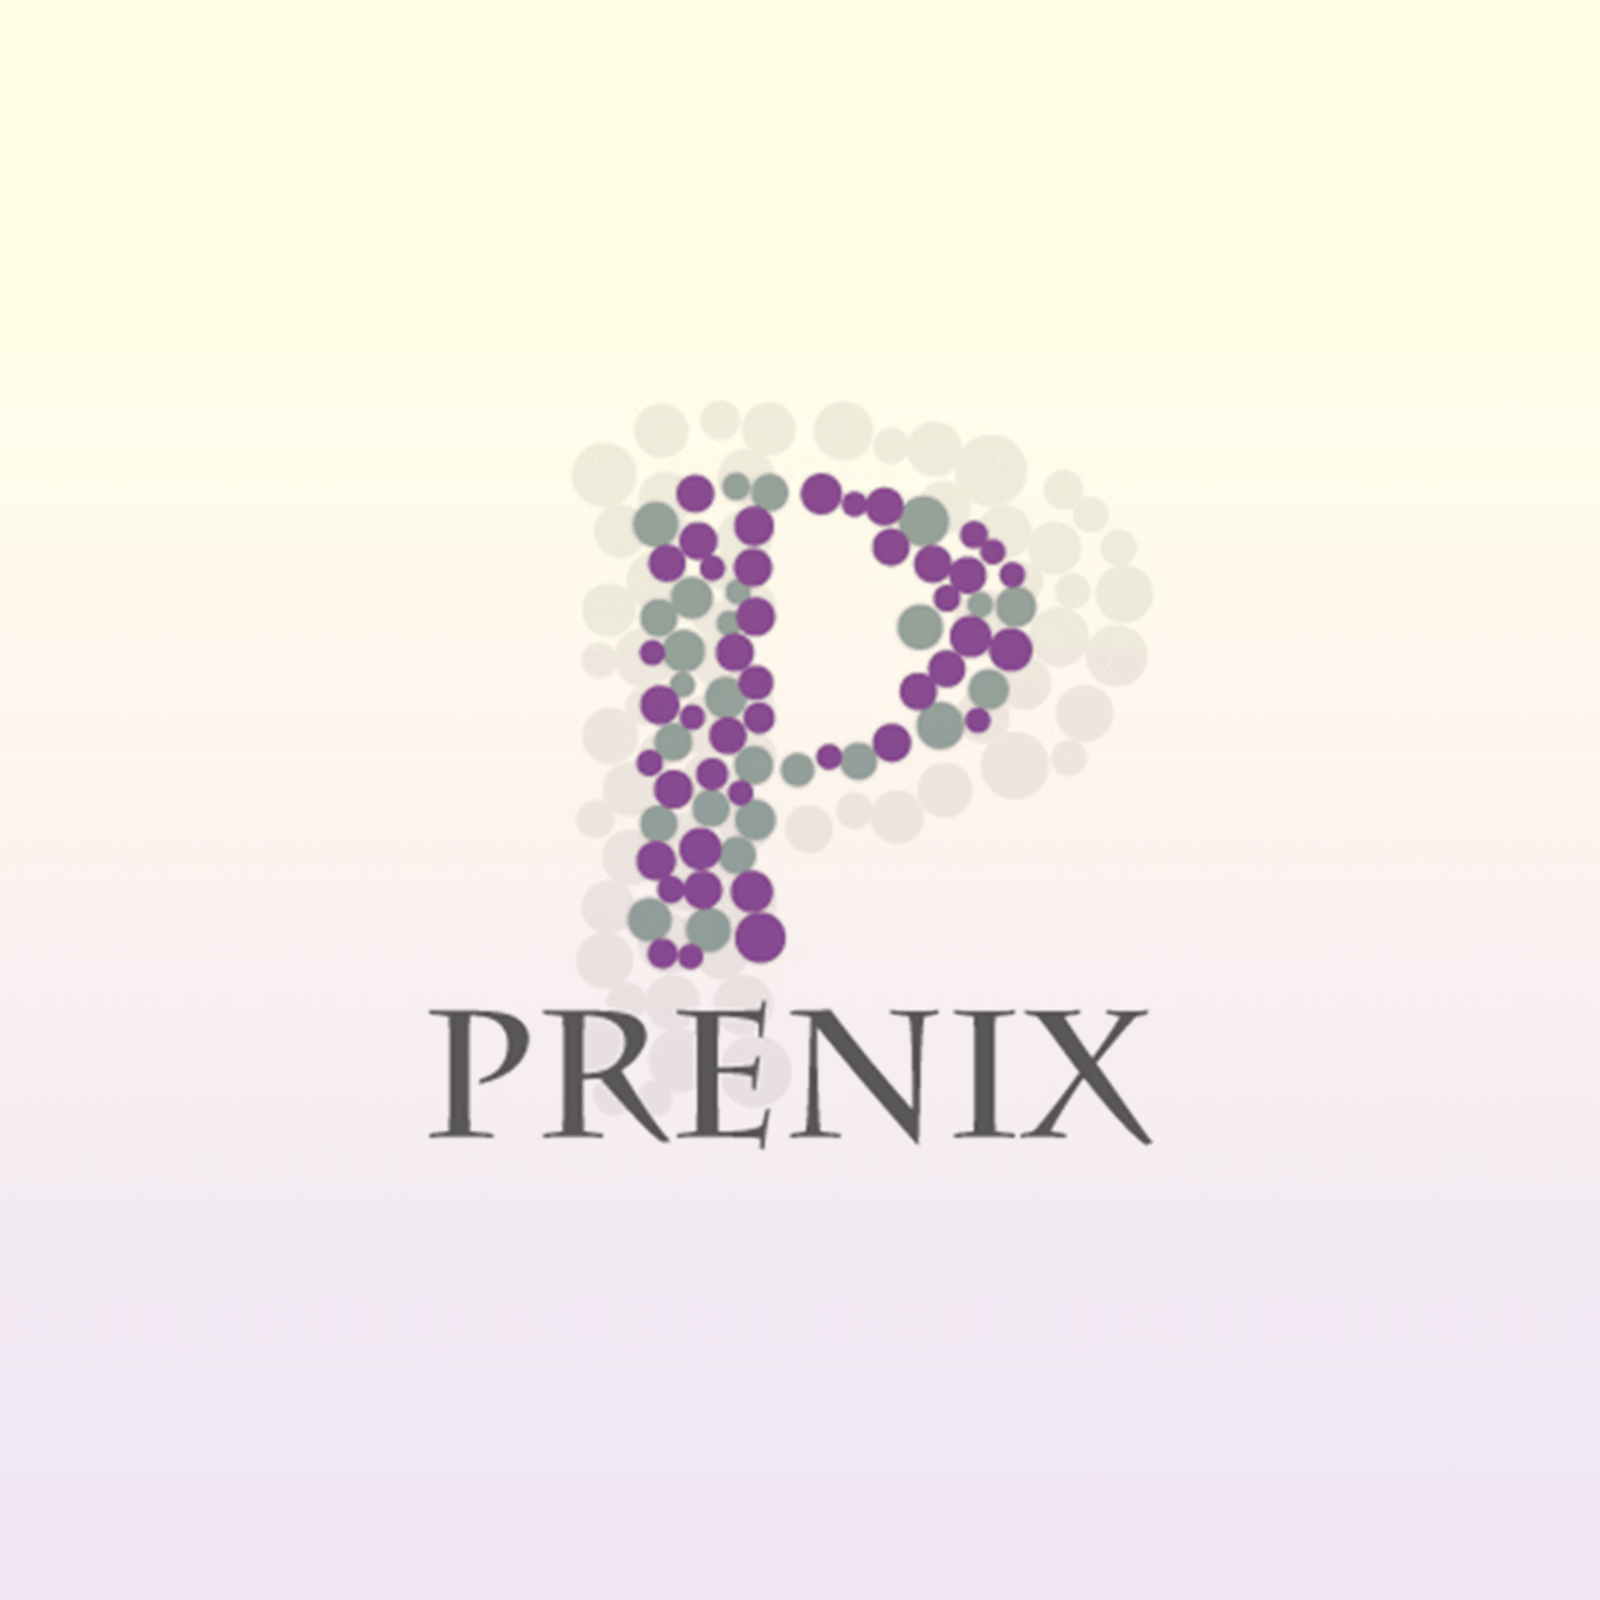 Prenix